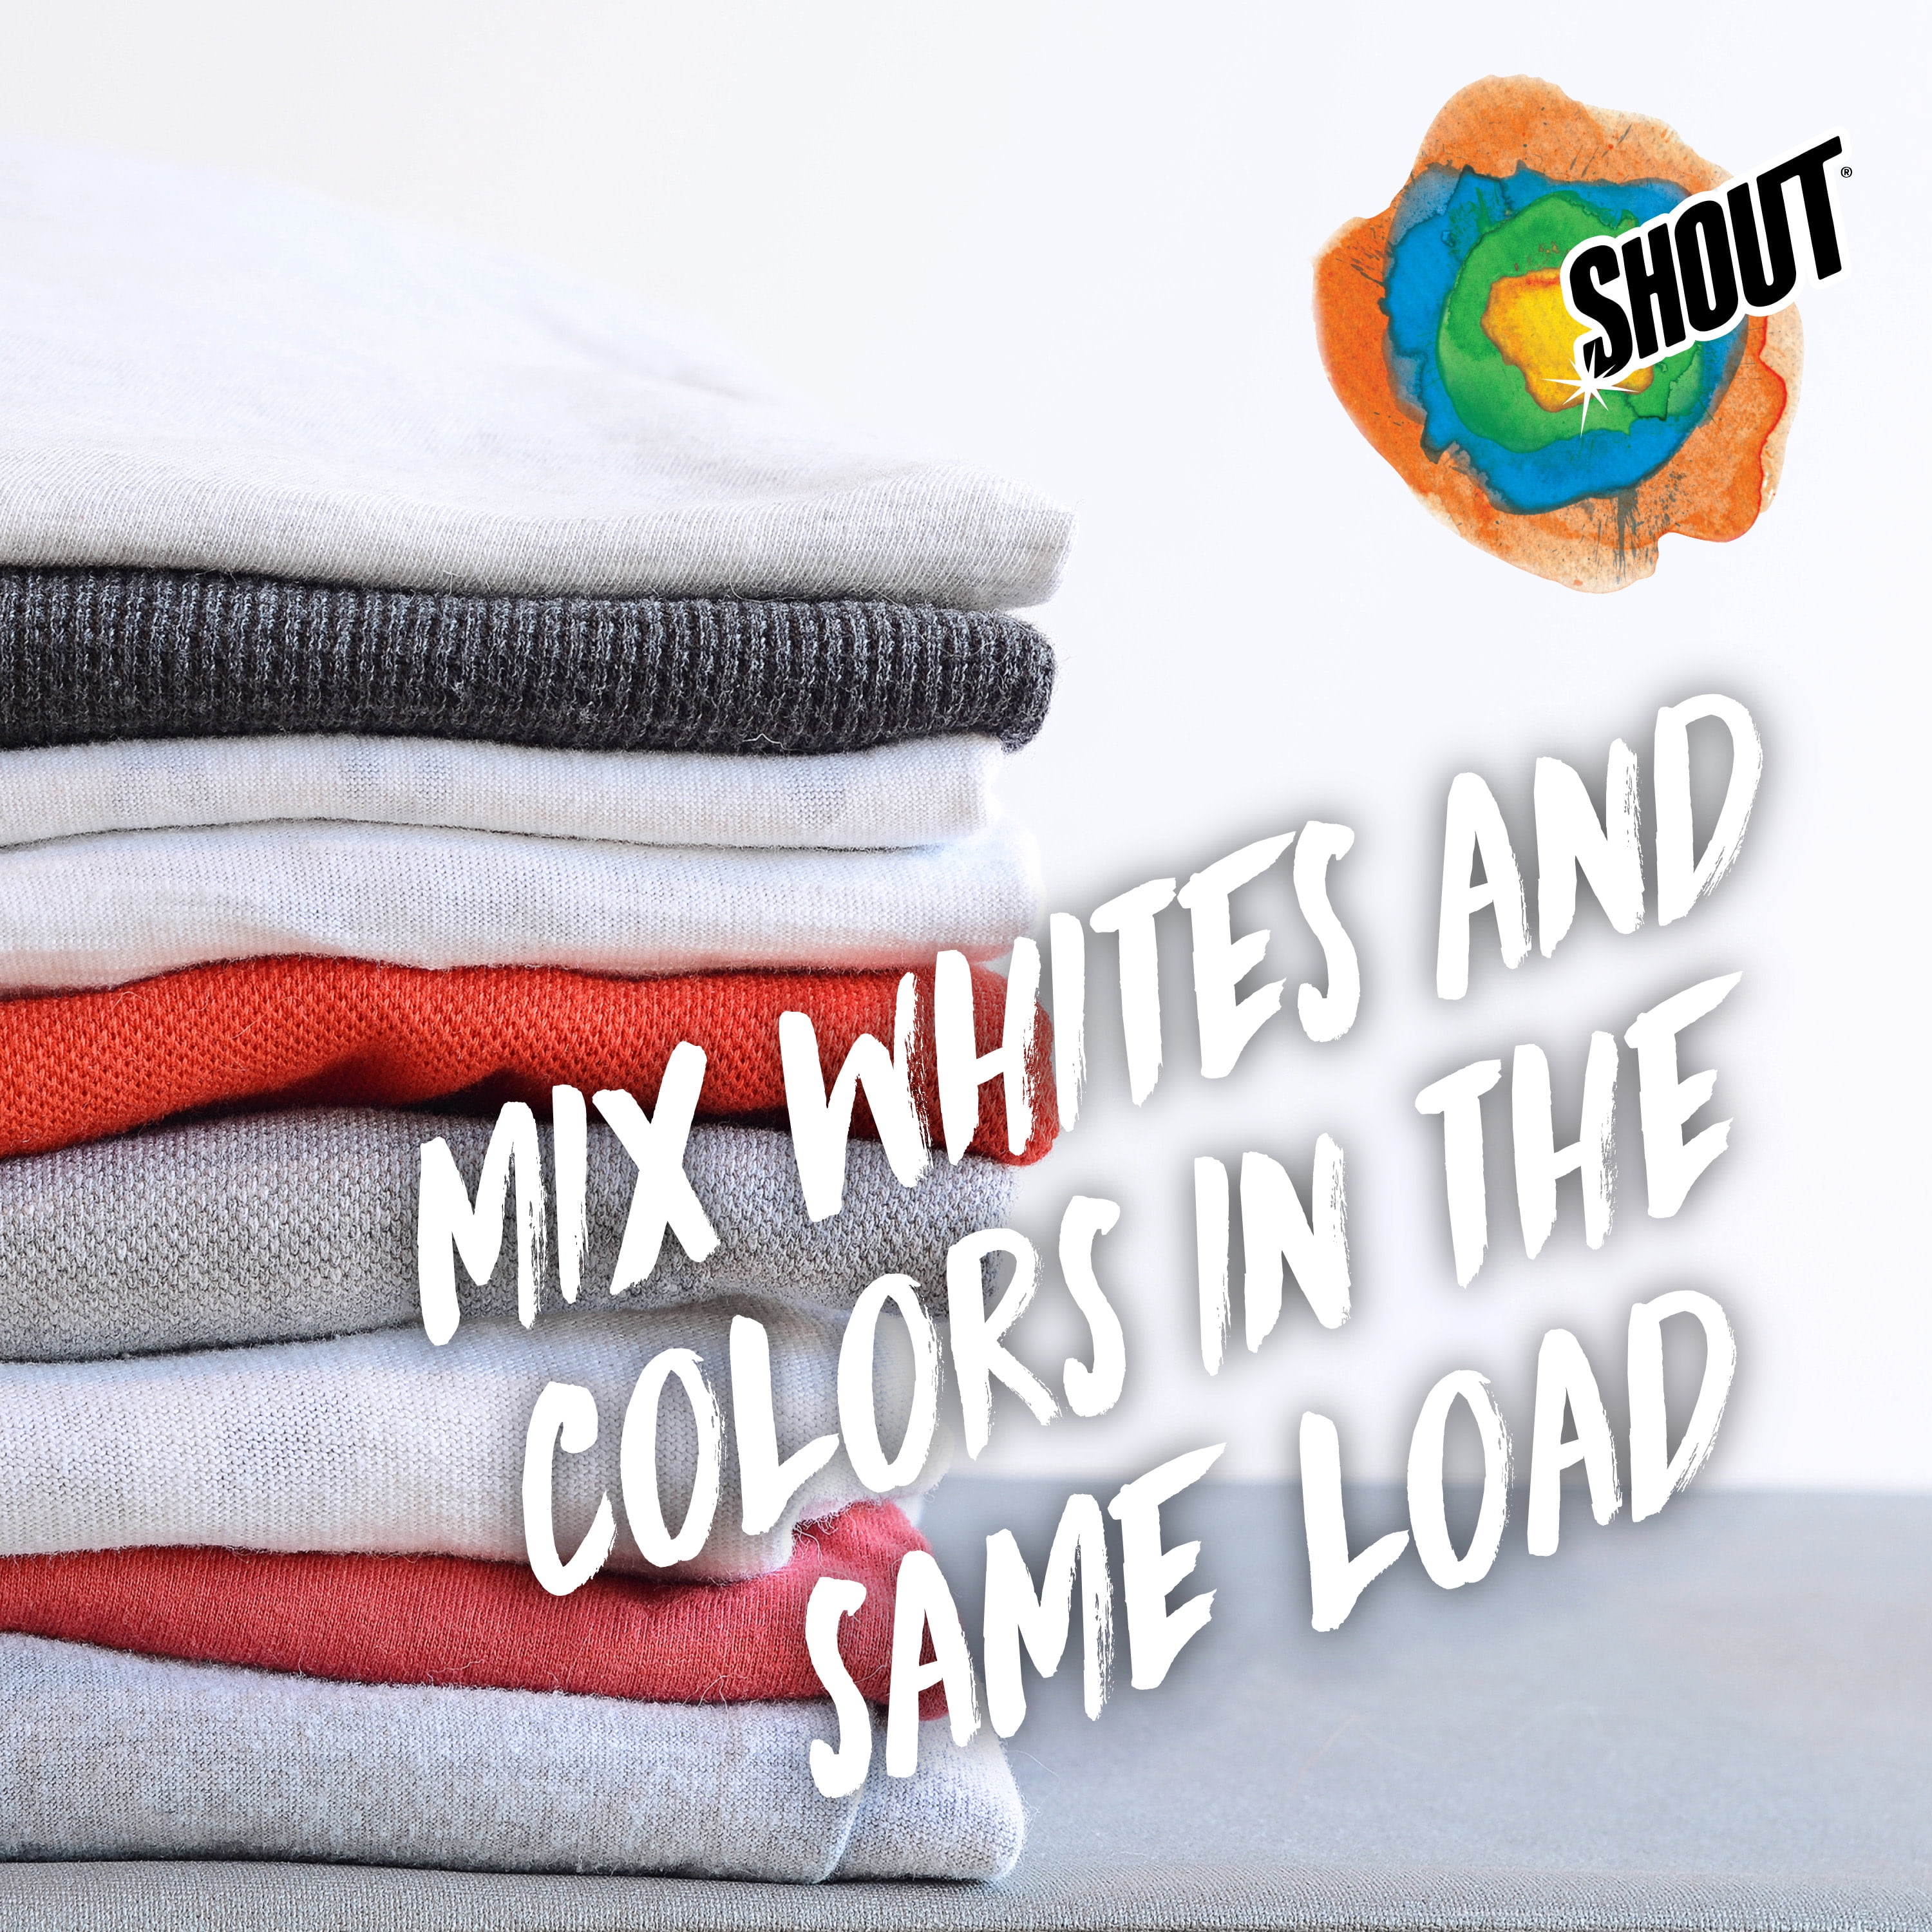 50pcs Laundry Sheet Dye-free Lock Color Wash Dark Clothes Color Catcher  Sheet